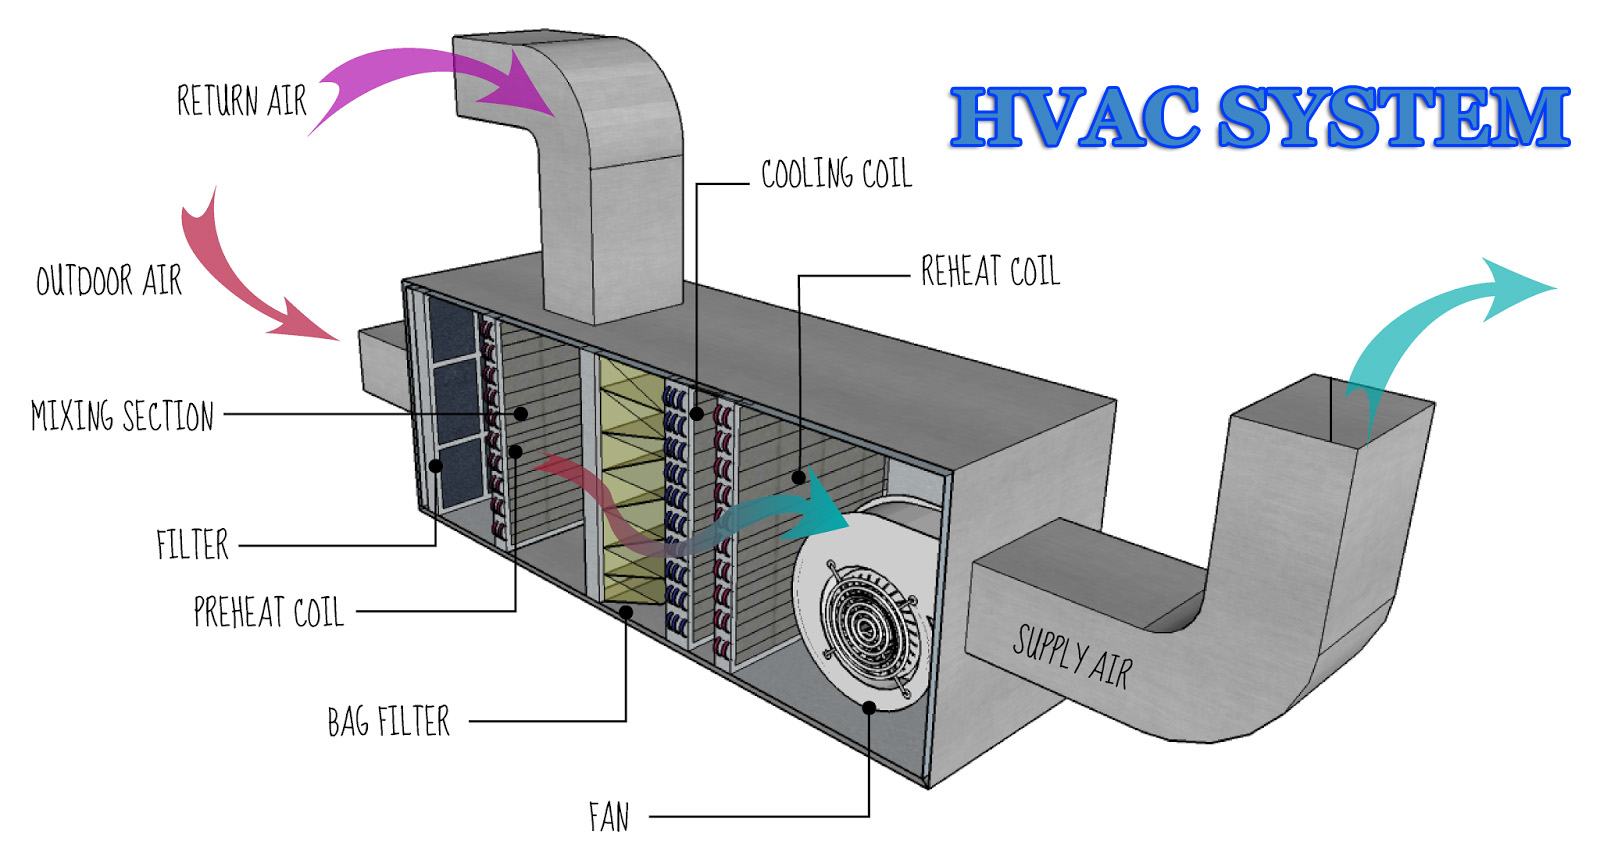 HVAC System, Components parts, cleanroom, คลีนรูม, ห้องคลีนรูม